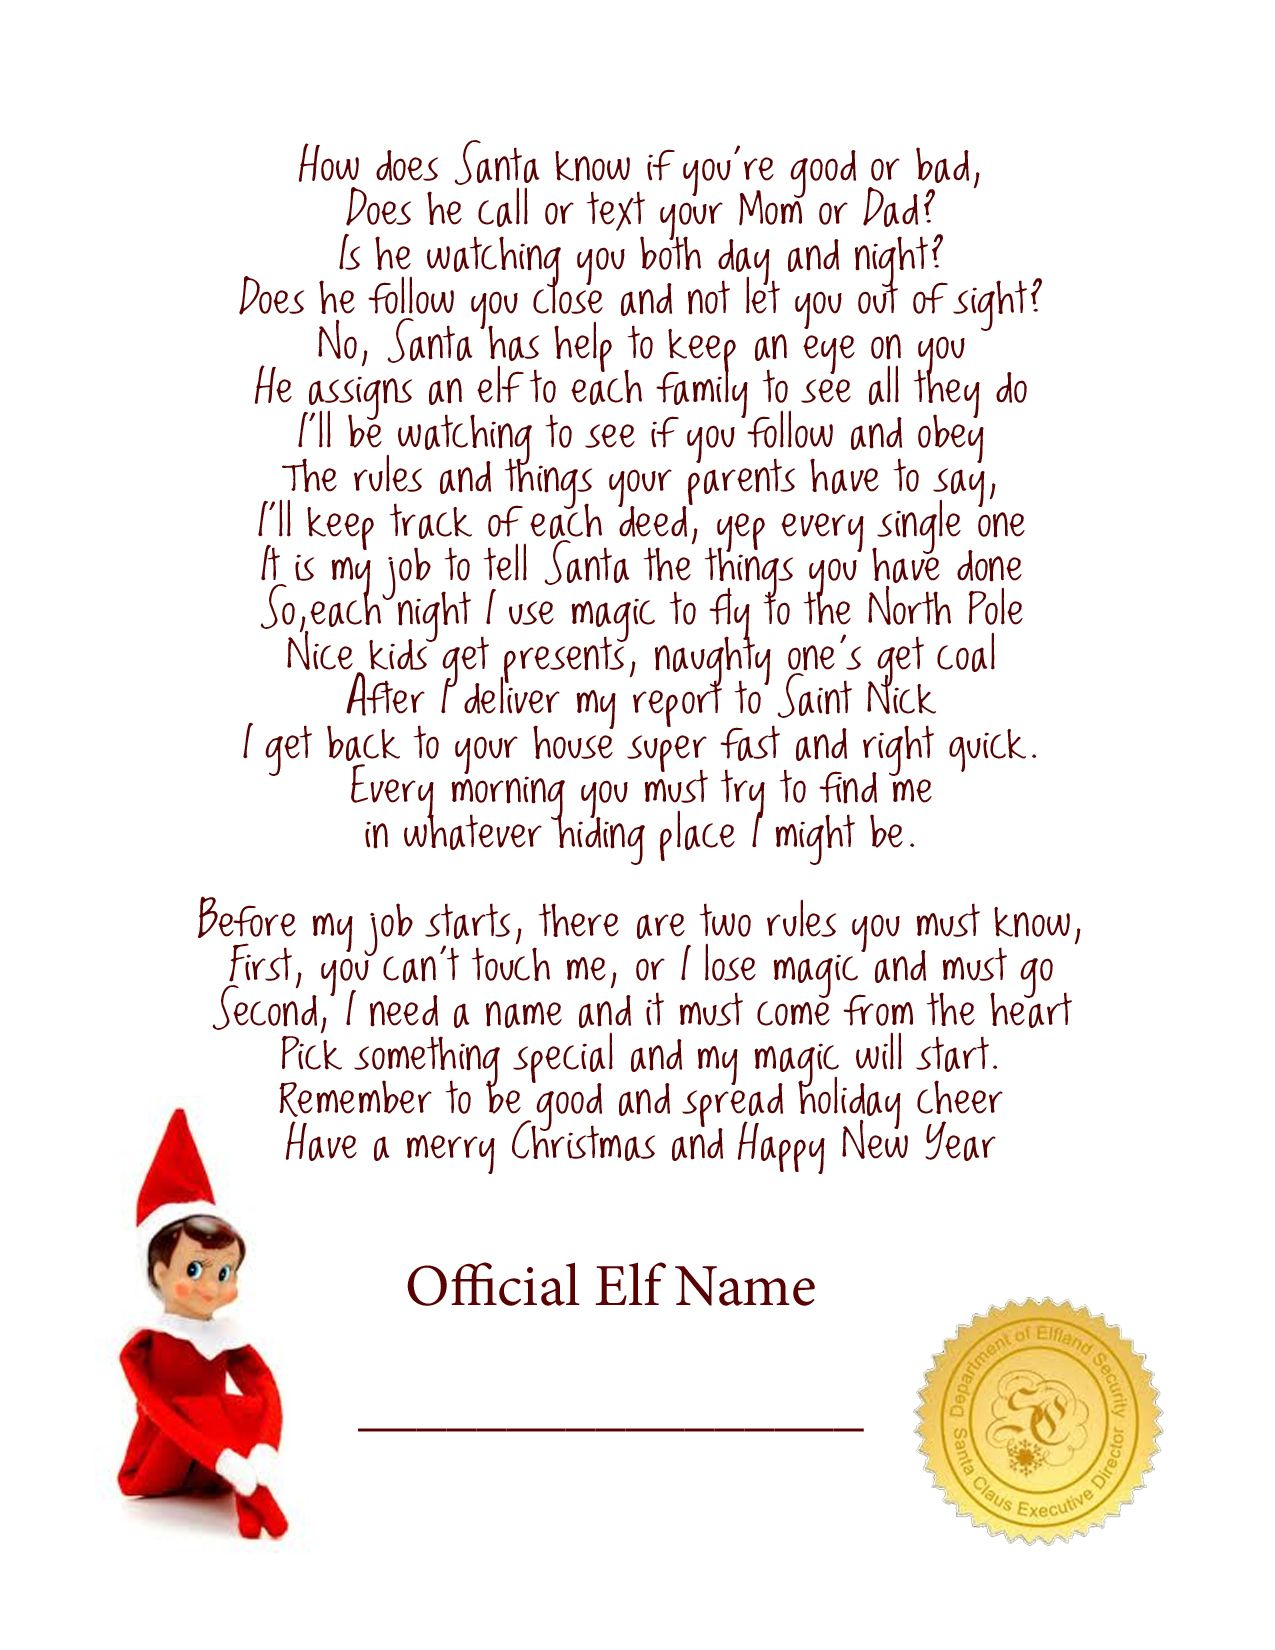 Elf On The Shelf Story - Free Printable Poem | Elf On The Shelf - Free Printable Elf On Shelf Arrival Letter